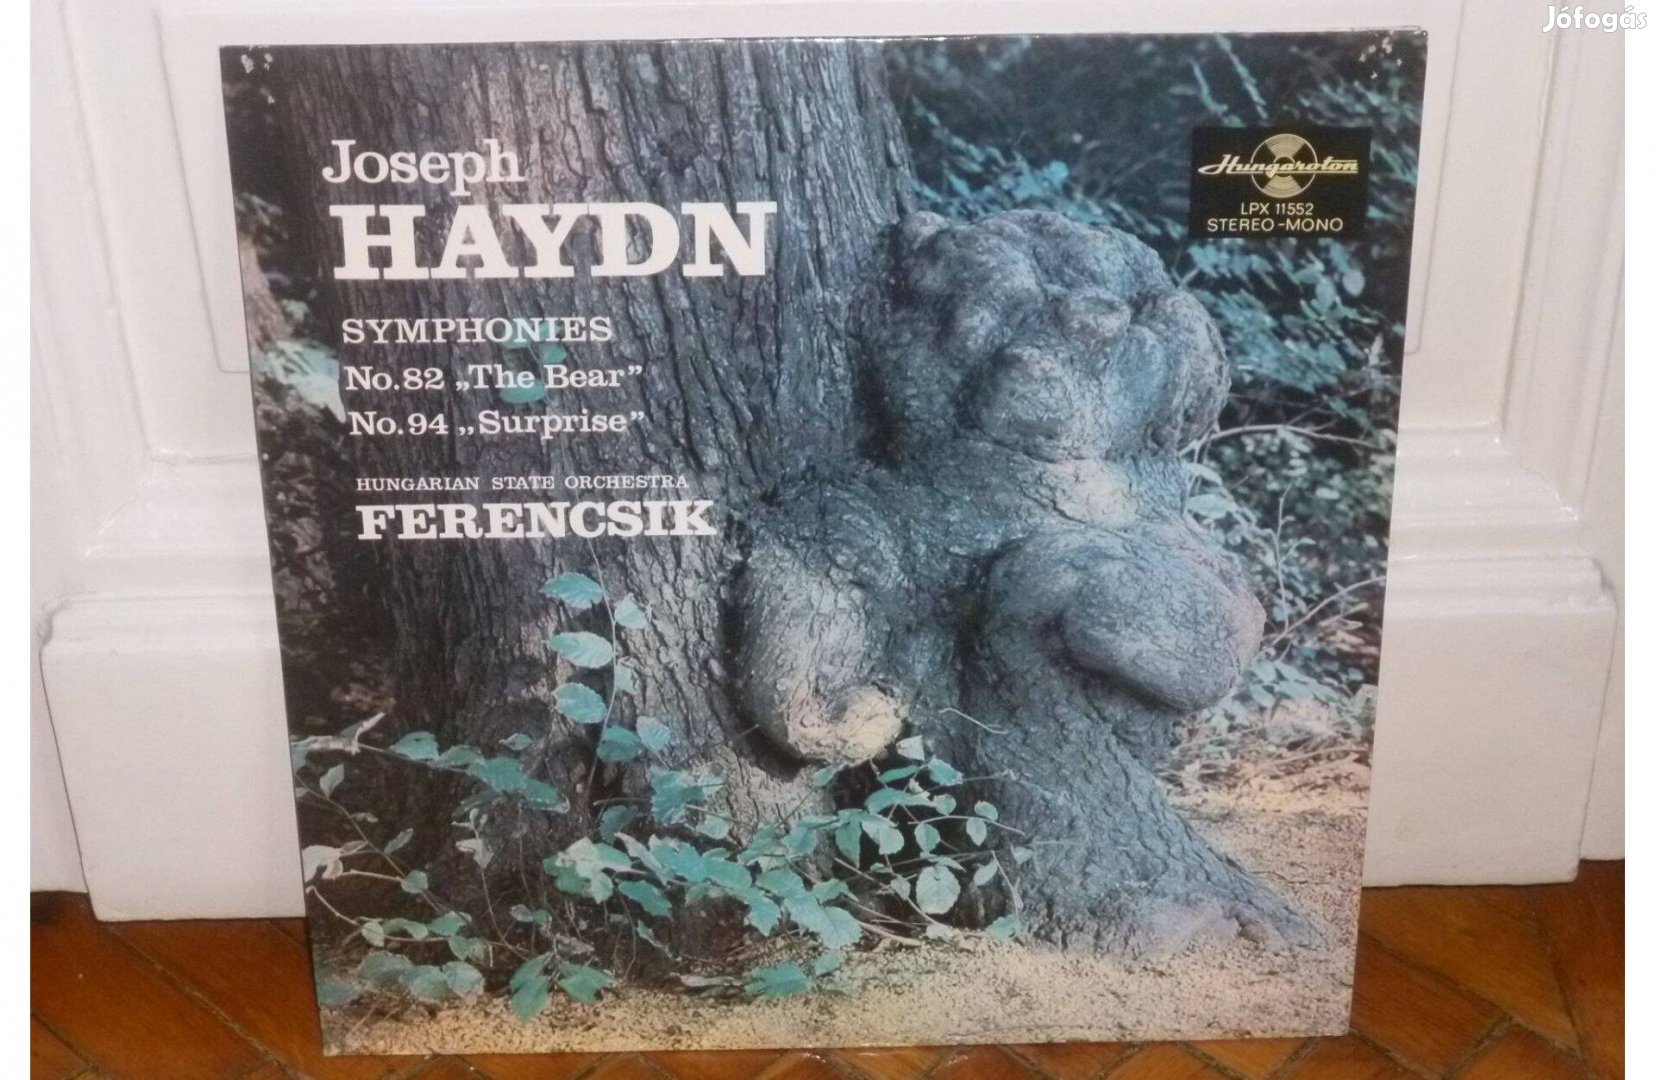 Haydn - Symphonies No.82 "The Bear", No.94 "Surprise" LP